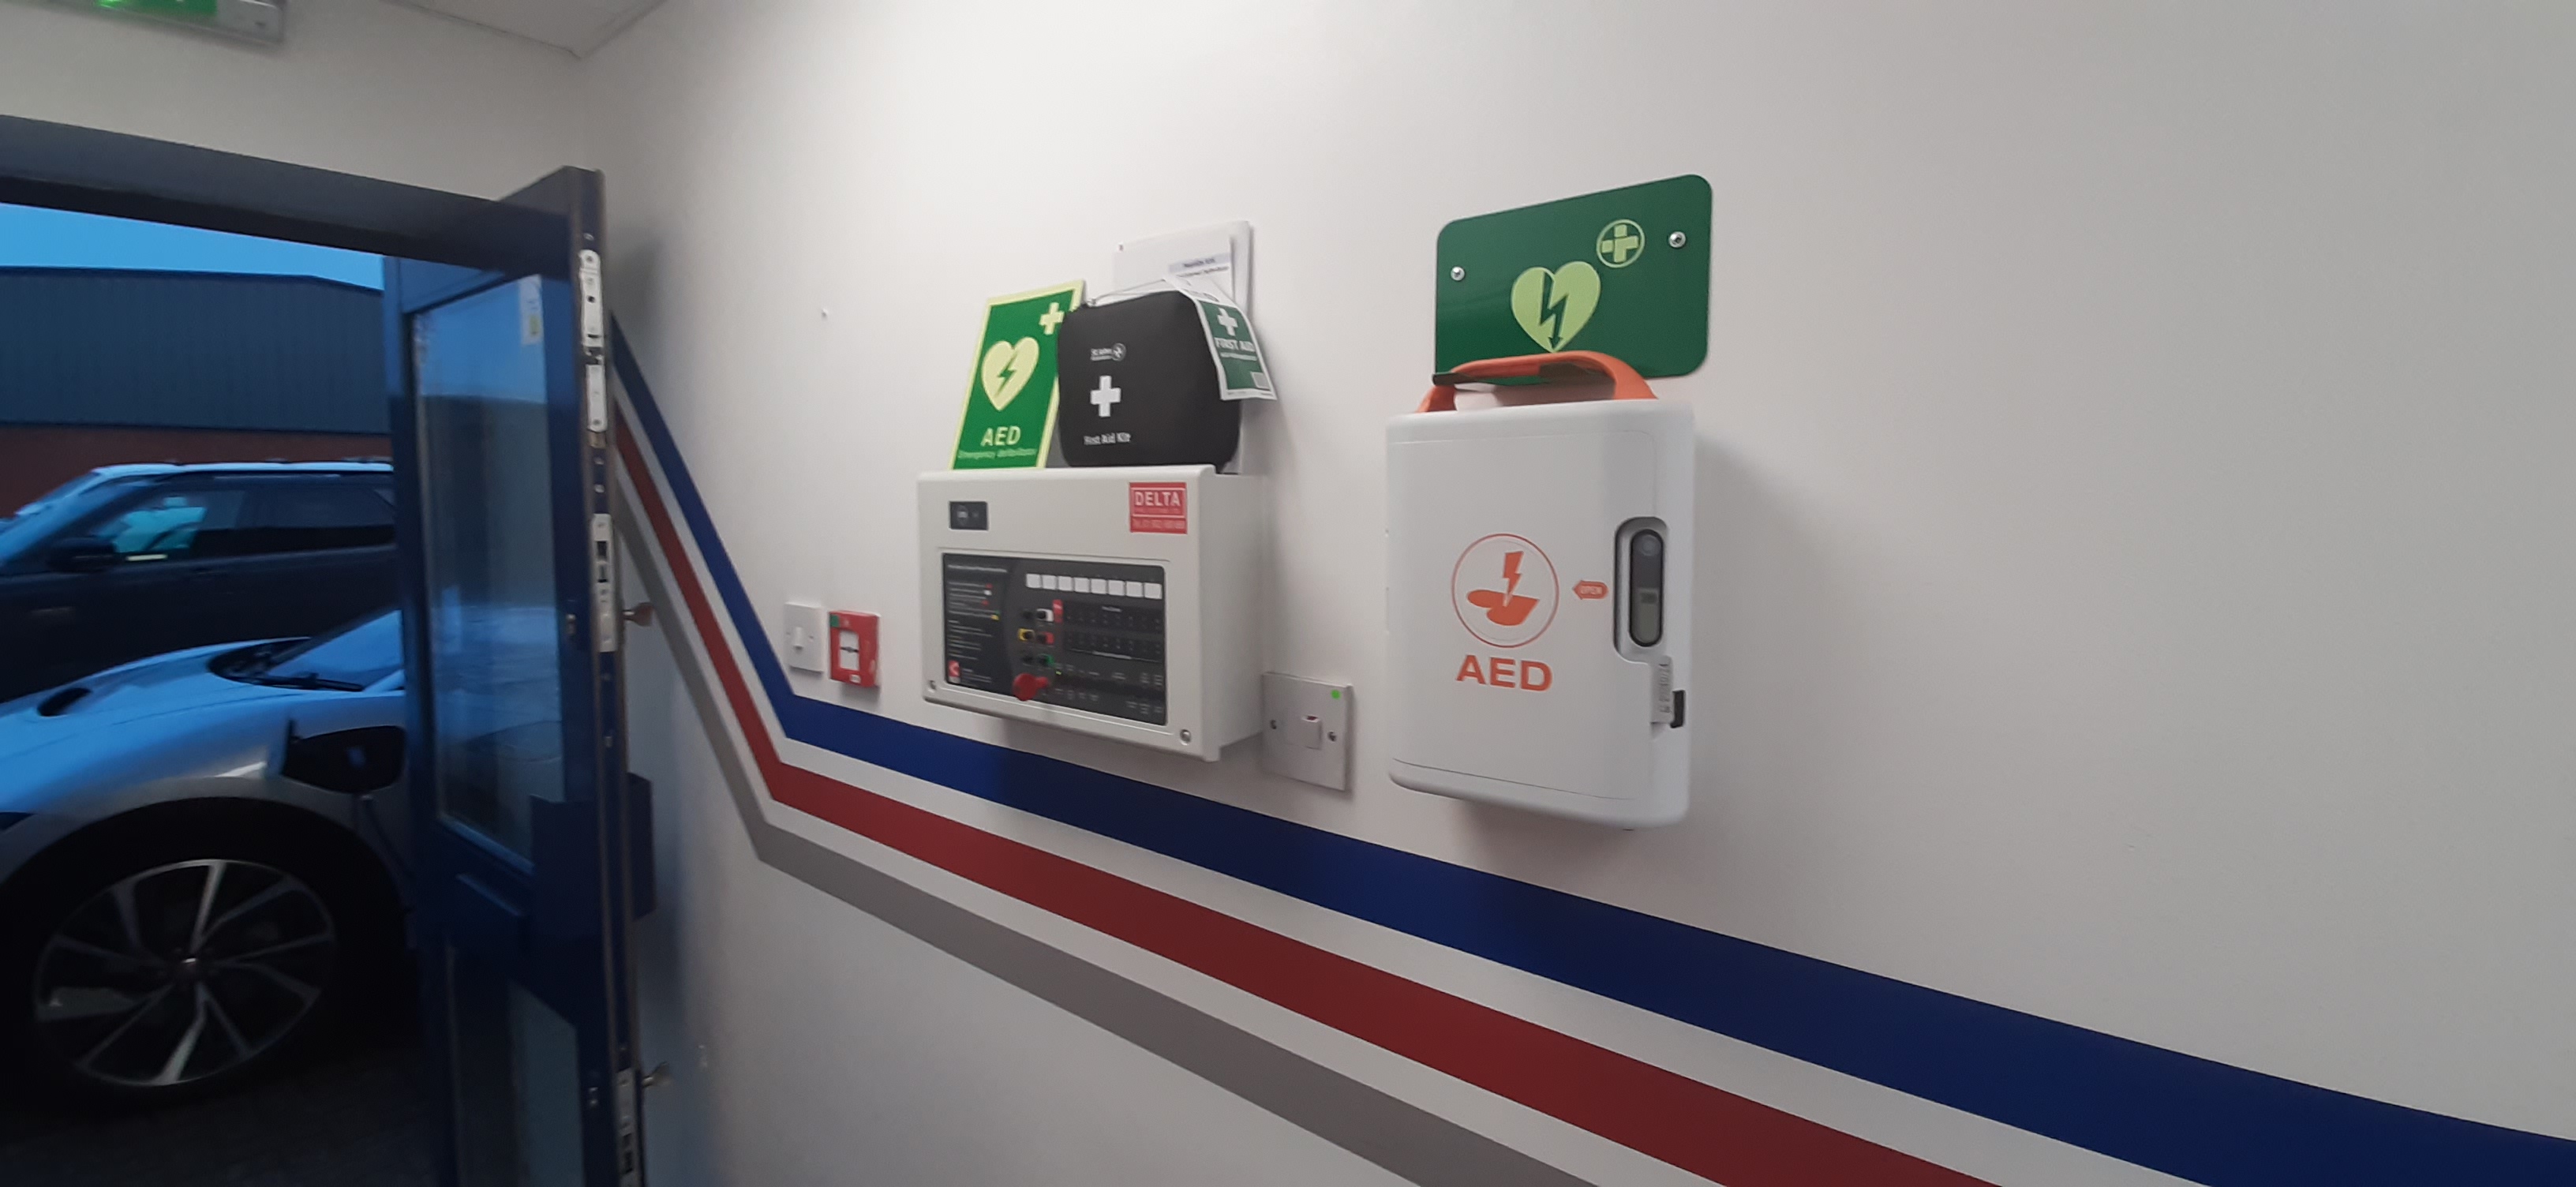 Automated External Defibrillator – LIFE SAVERS